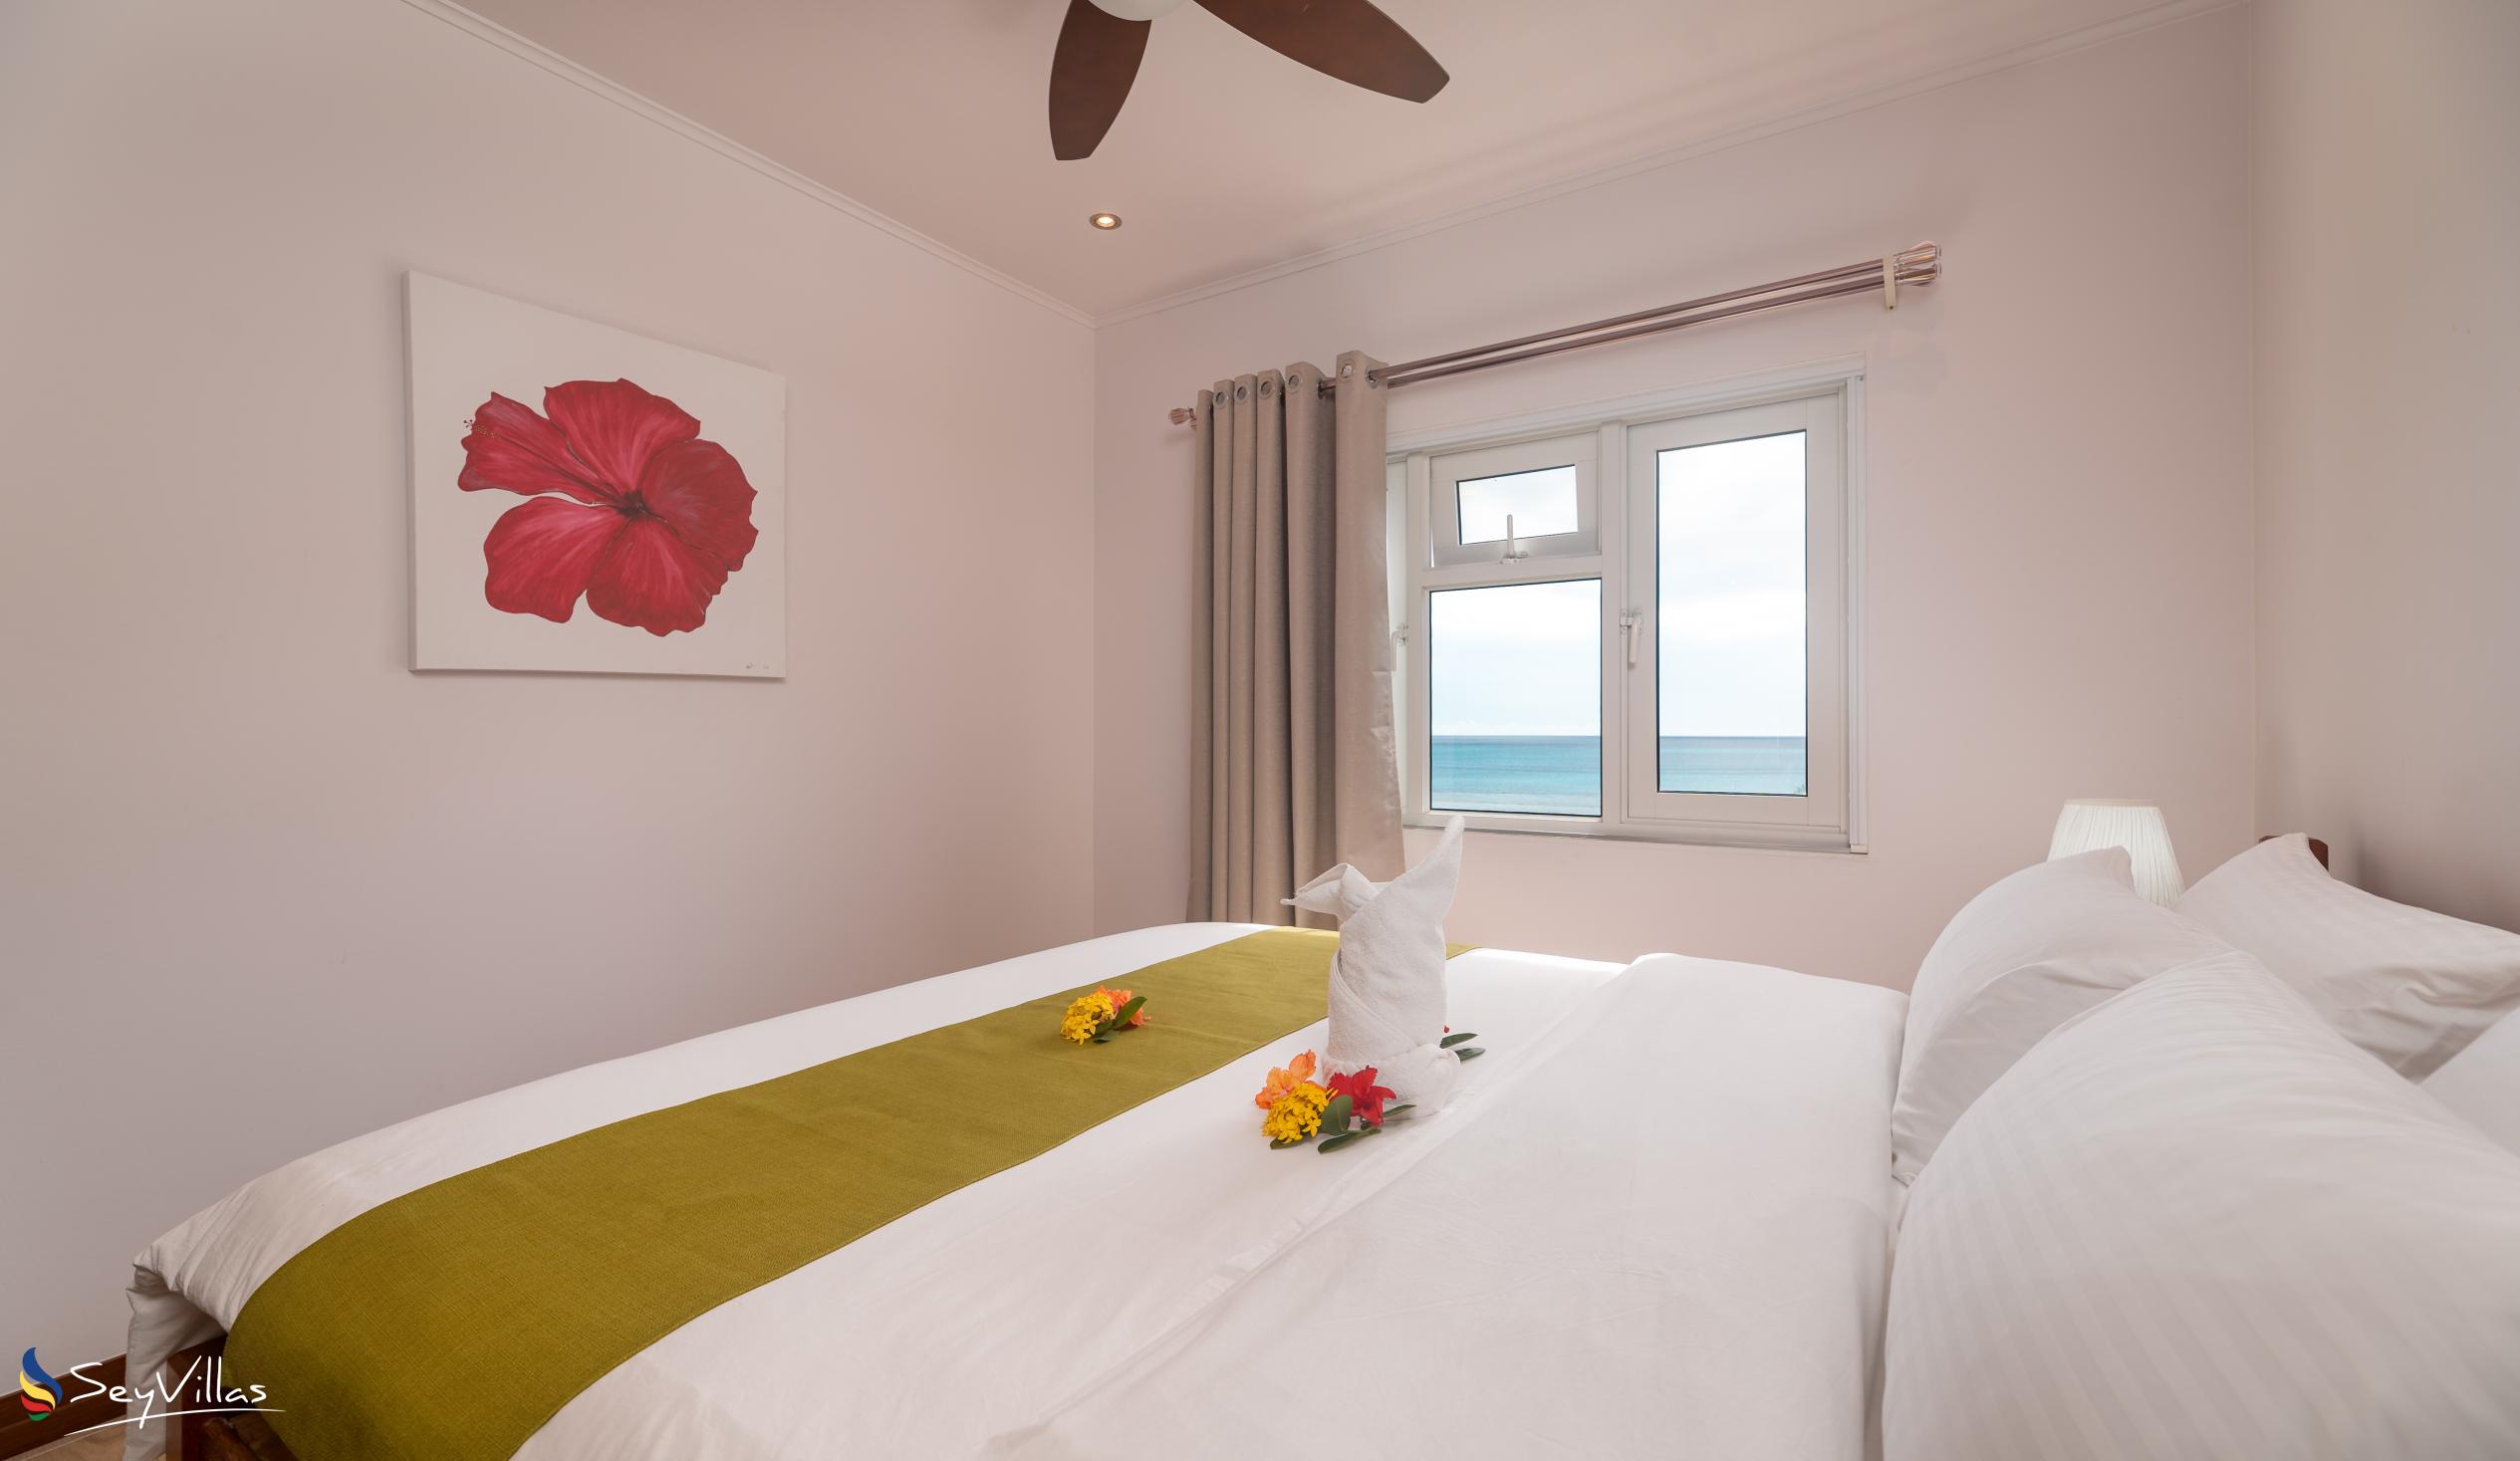 Foto 32: Crystal Shores Self Catering Apartments - Appartamento vista sul mare - Mahé (Seychelles)